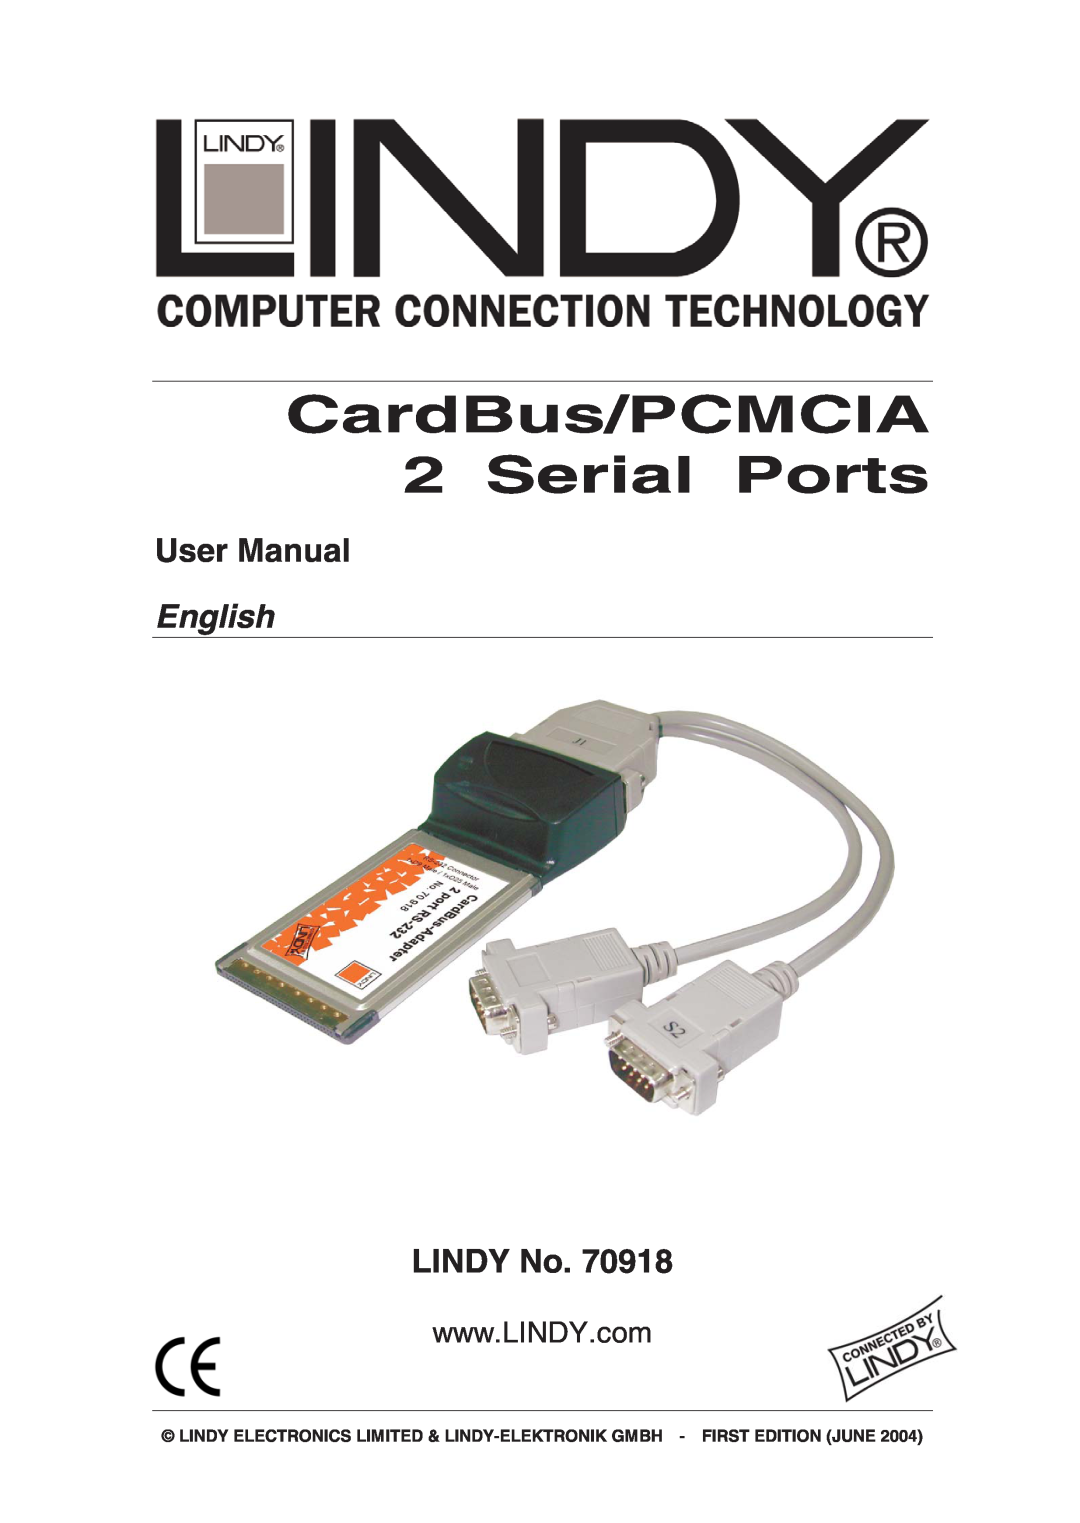 Lindy 70918 user manual User Manual, LINDY No, CardBus/PCMCIA 2 Serial Ports, English 